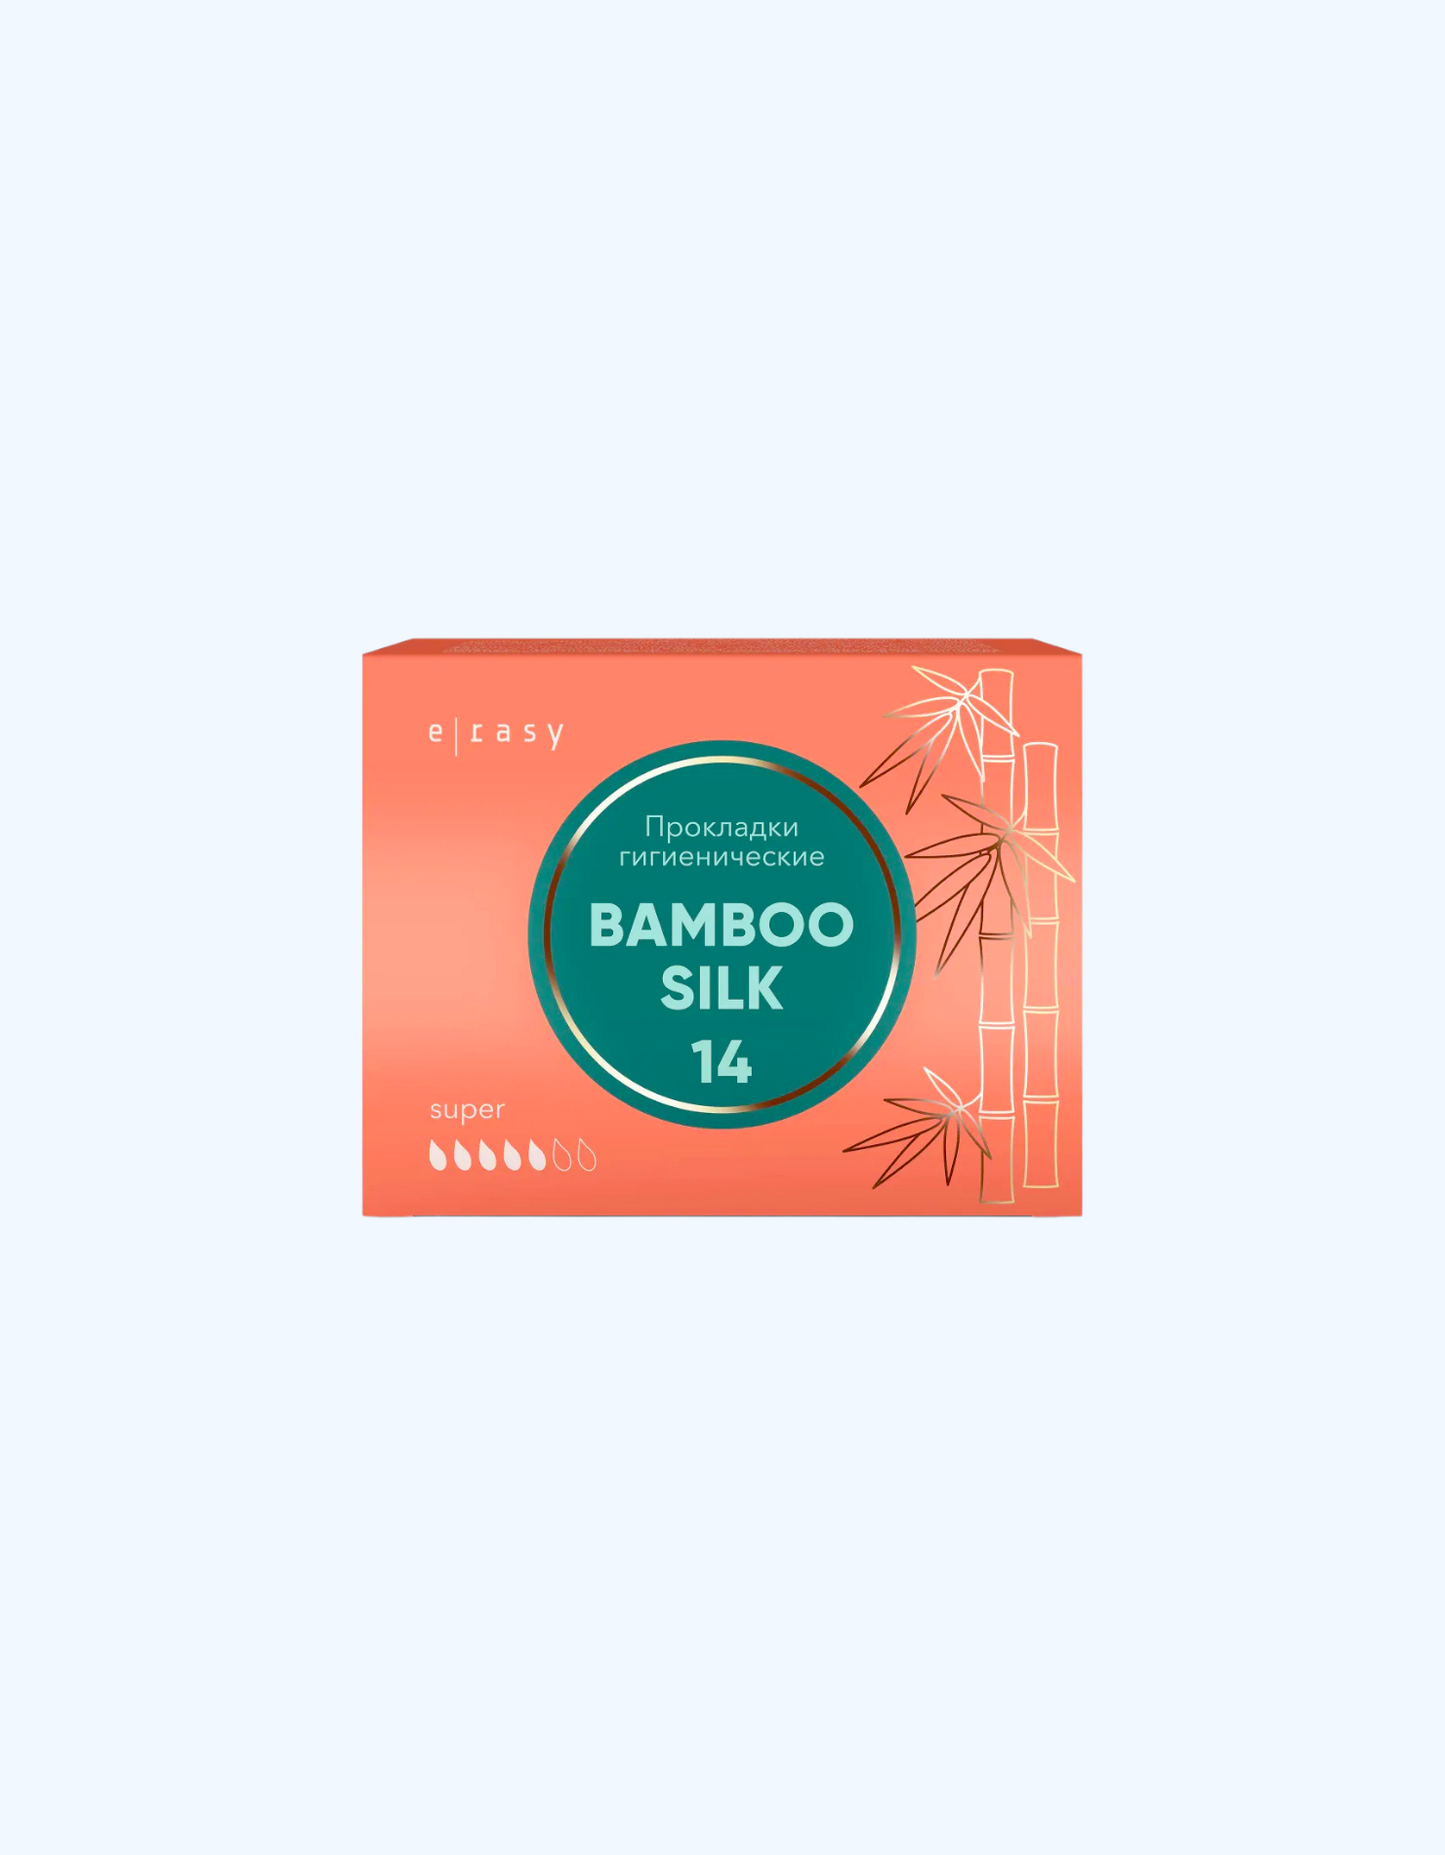 E-RASY Прокладки BAMBOO SILK super, 14 шт